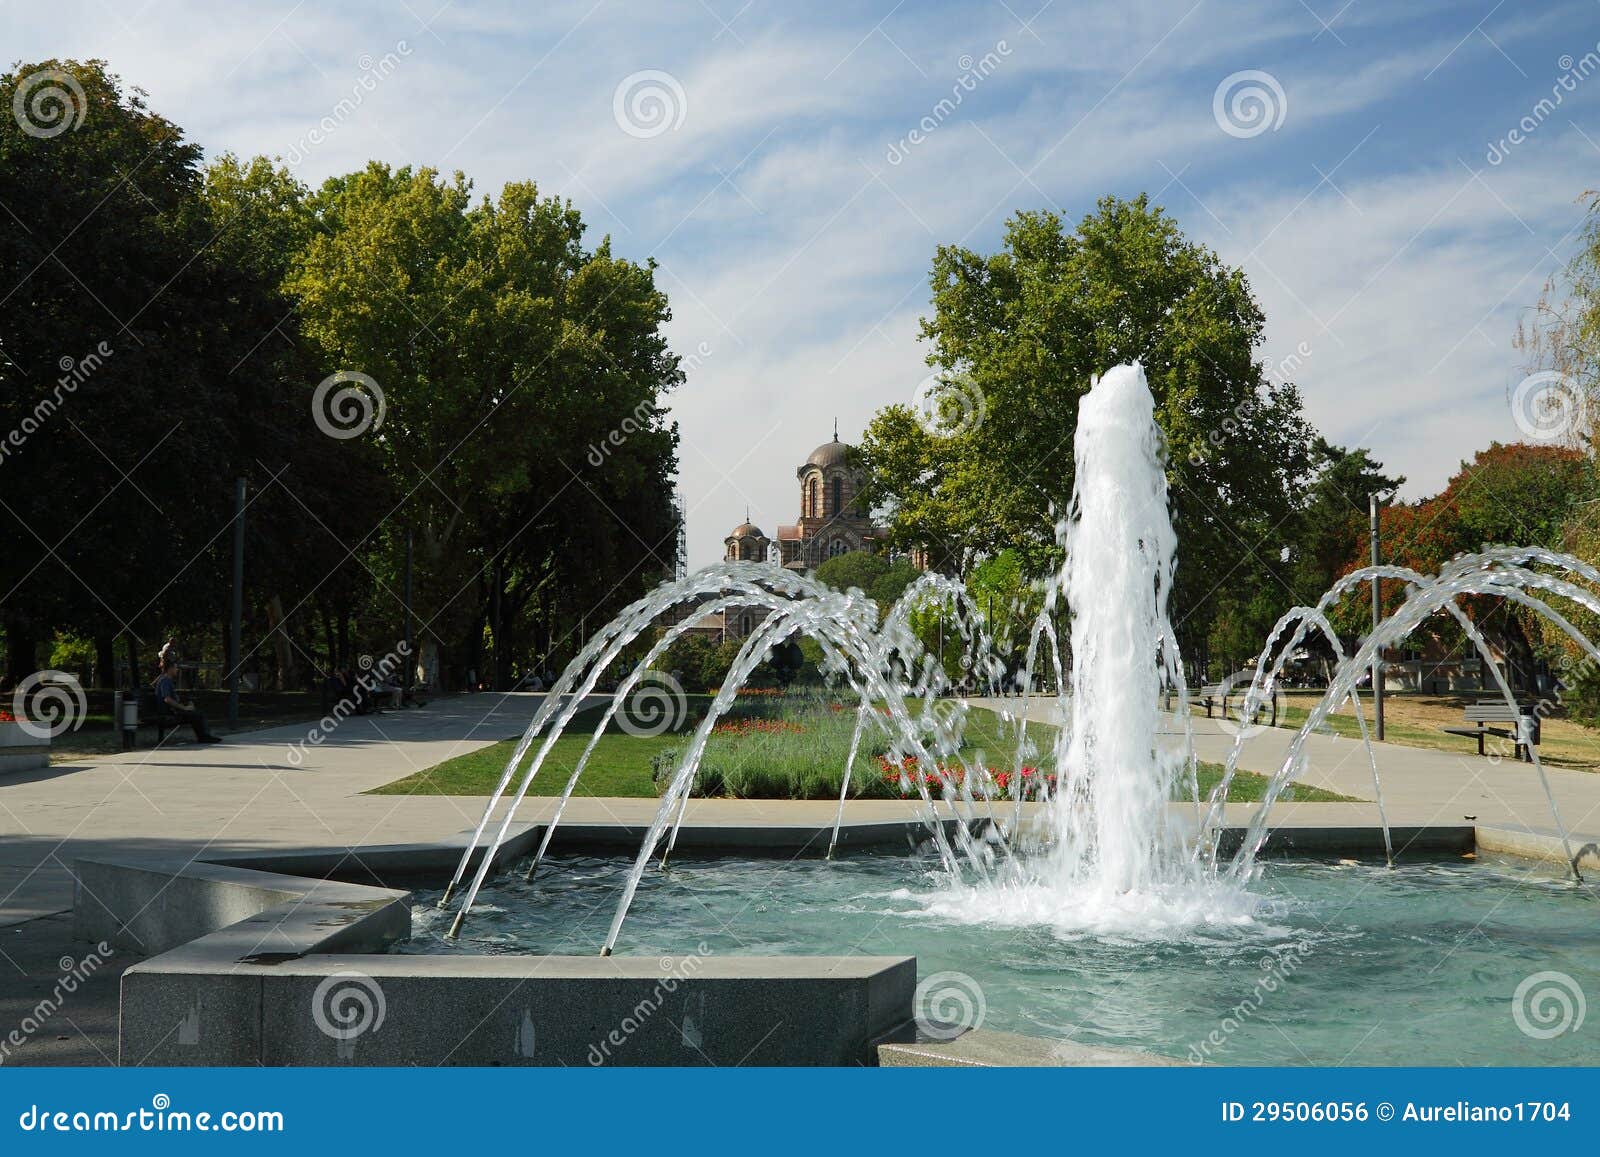 serbia, belgrad, tasmajdan park, fountain and saint mark church